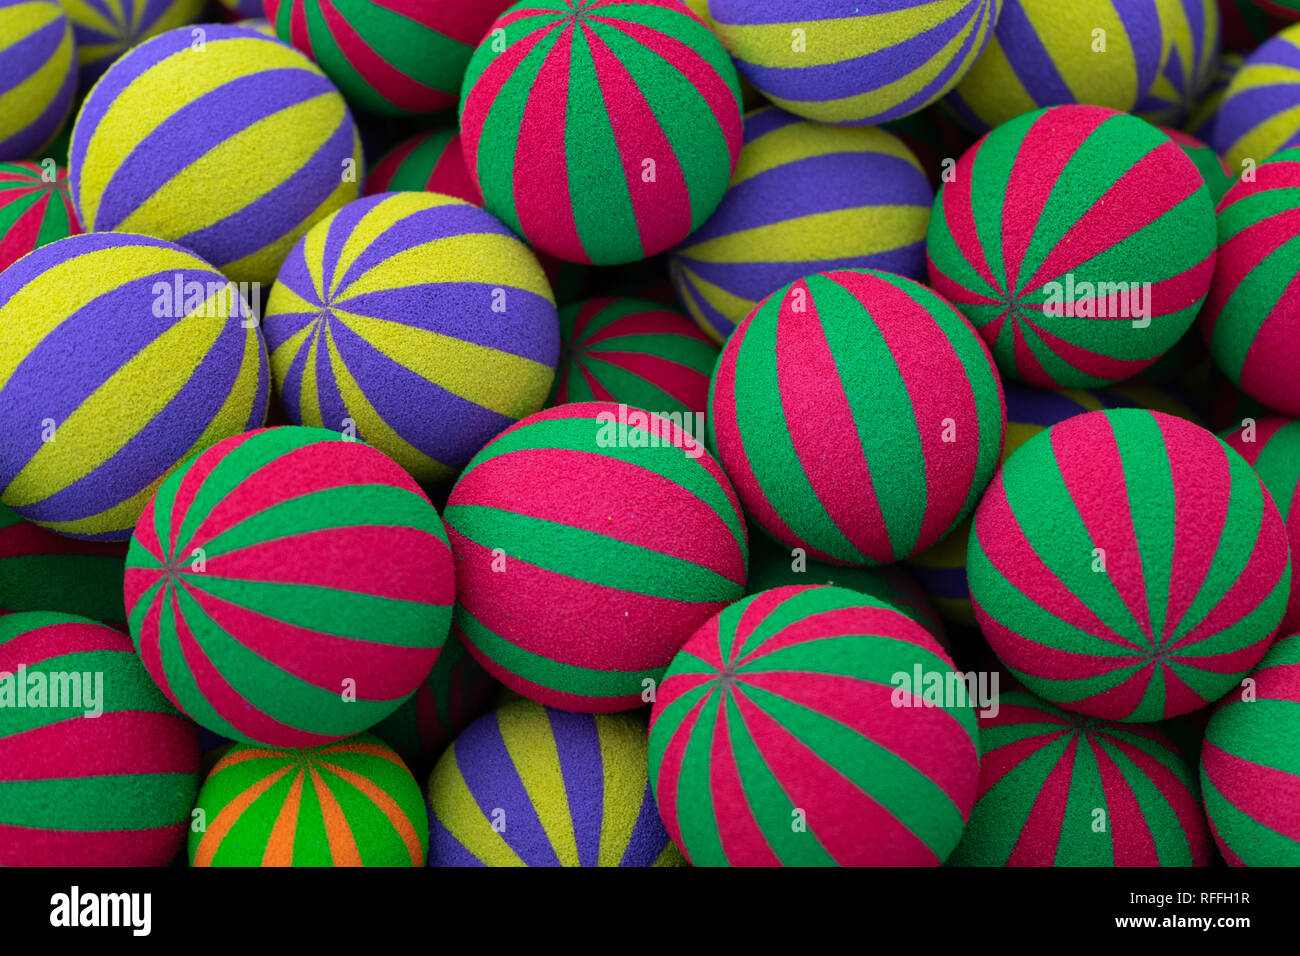 Vivid color toy balls Stock Photo